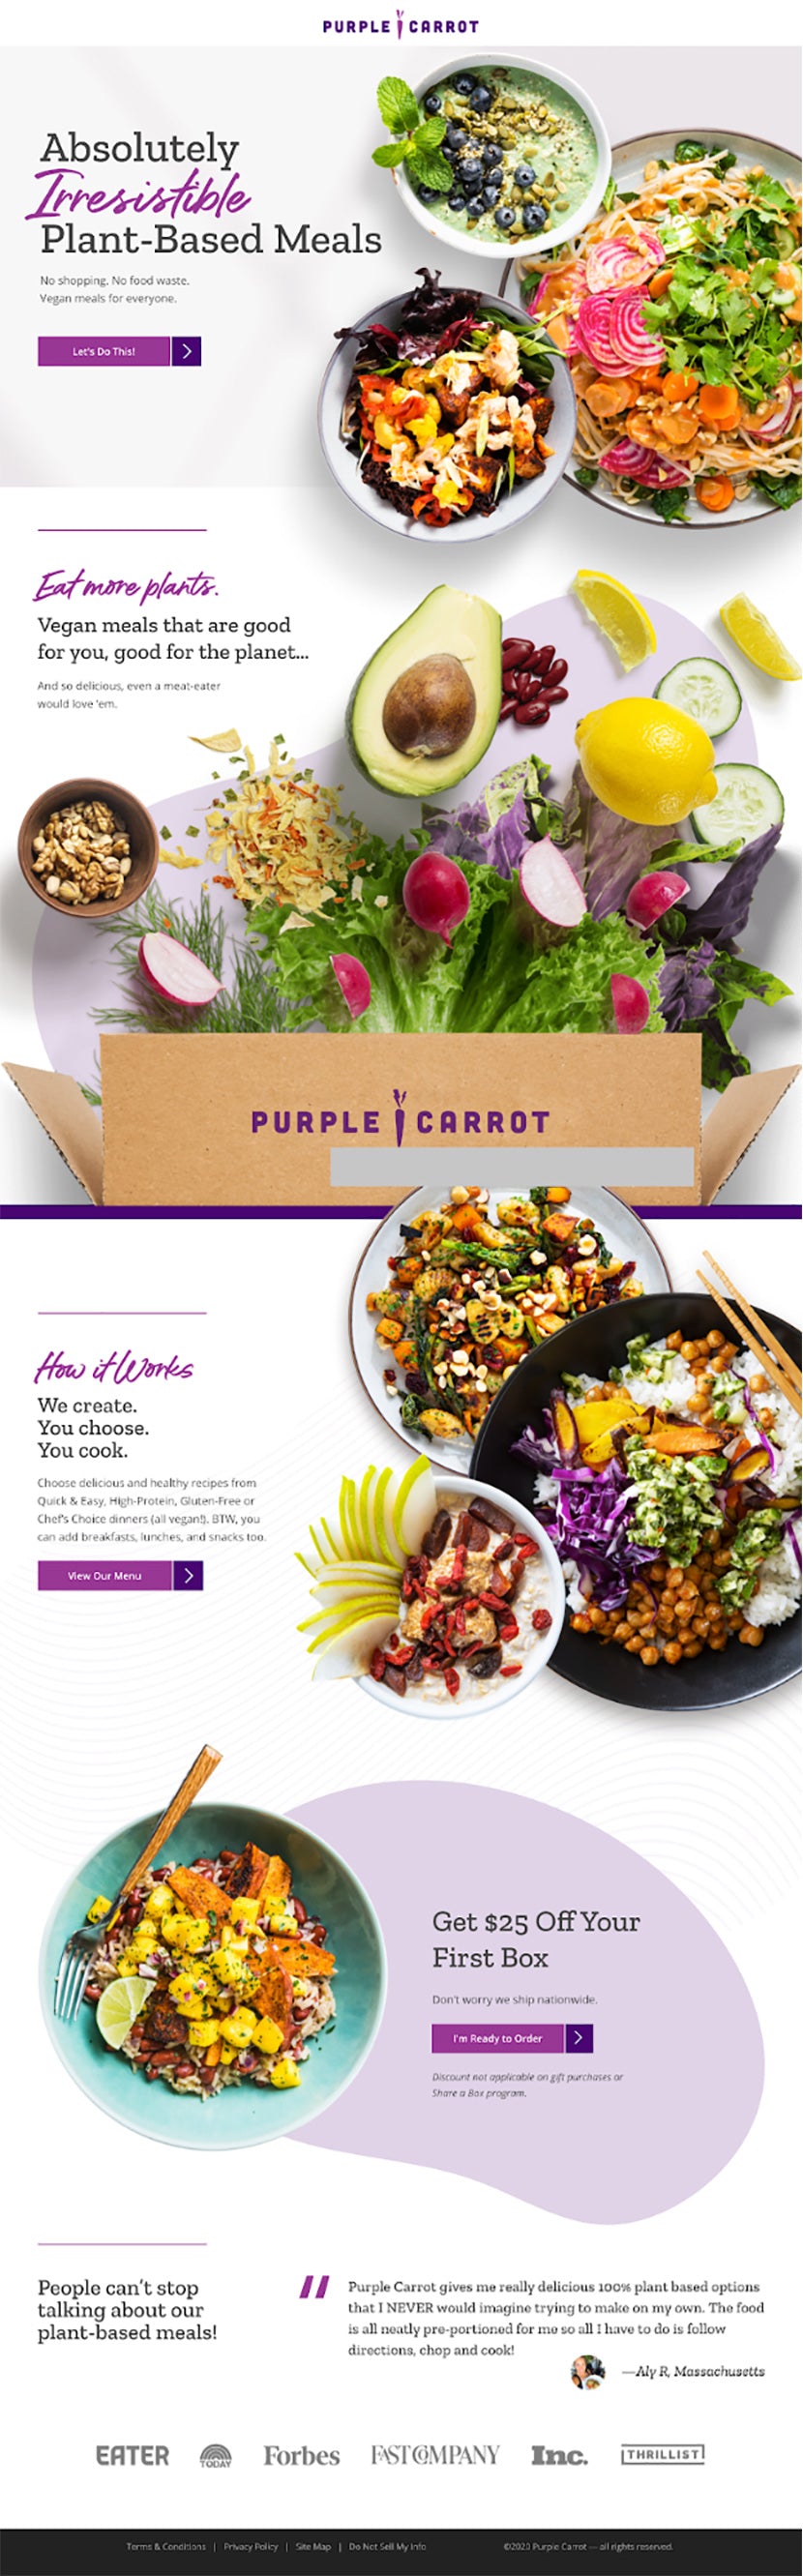 Purple Carrot landing page